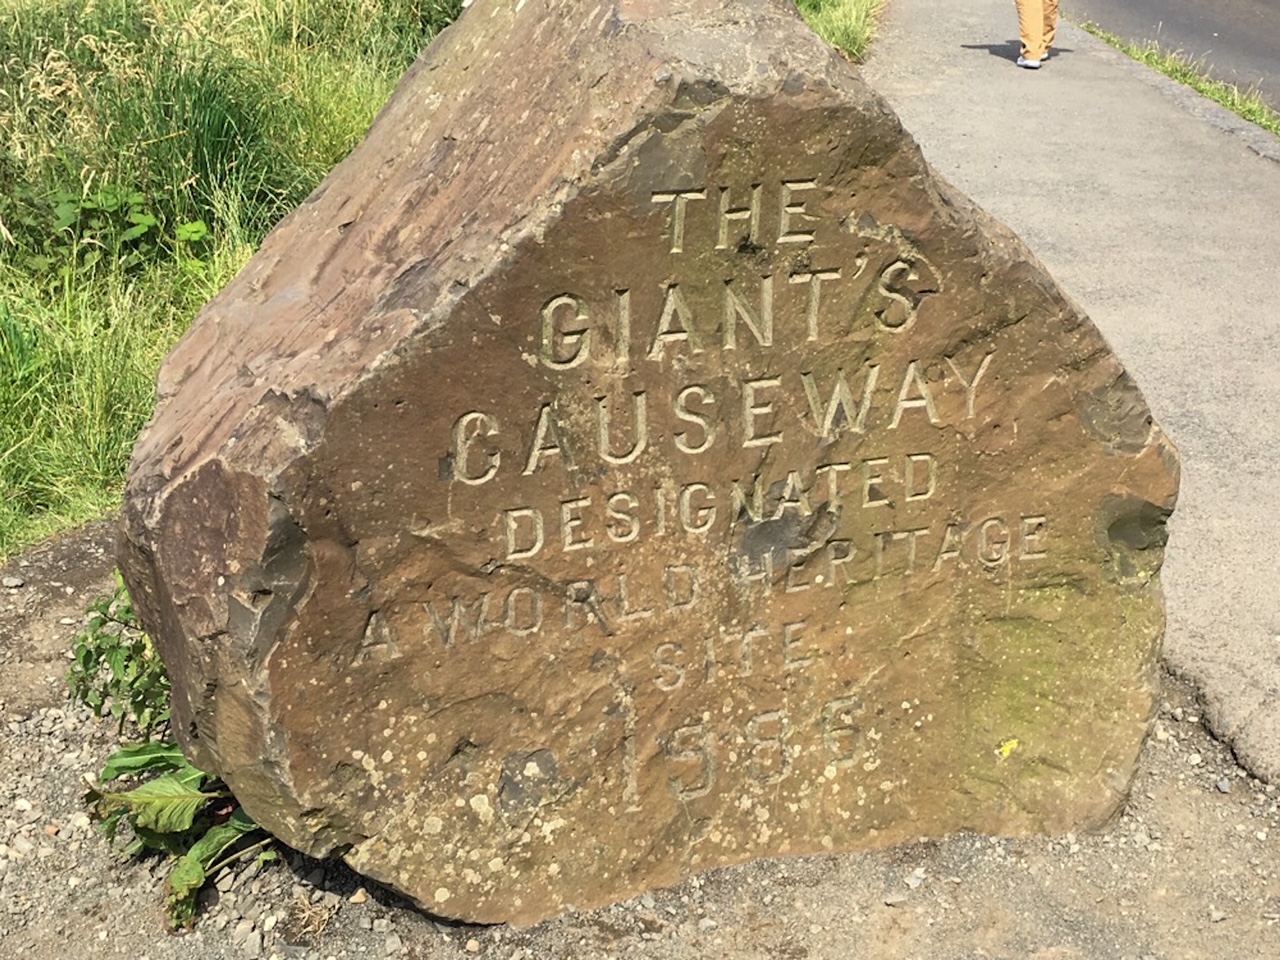 Giant's Causeway World Heritage Site